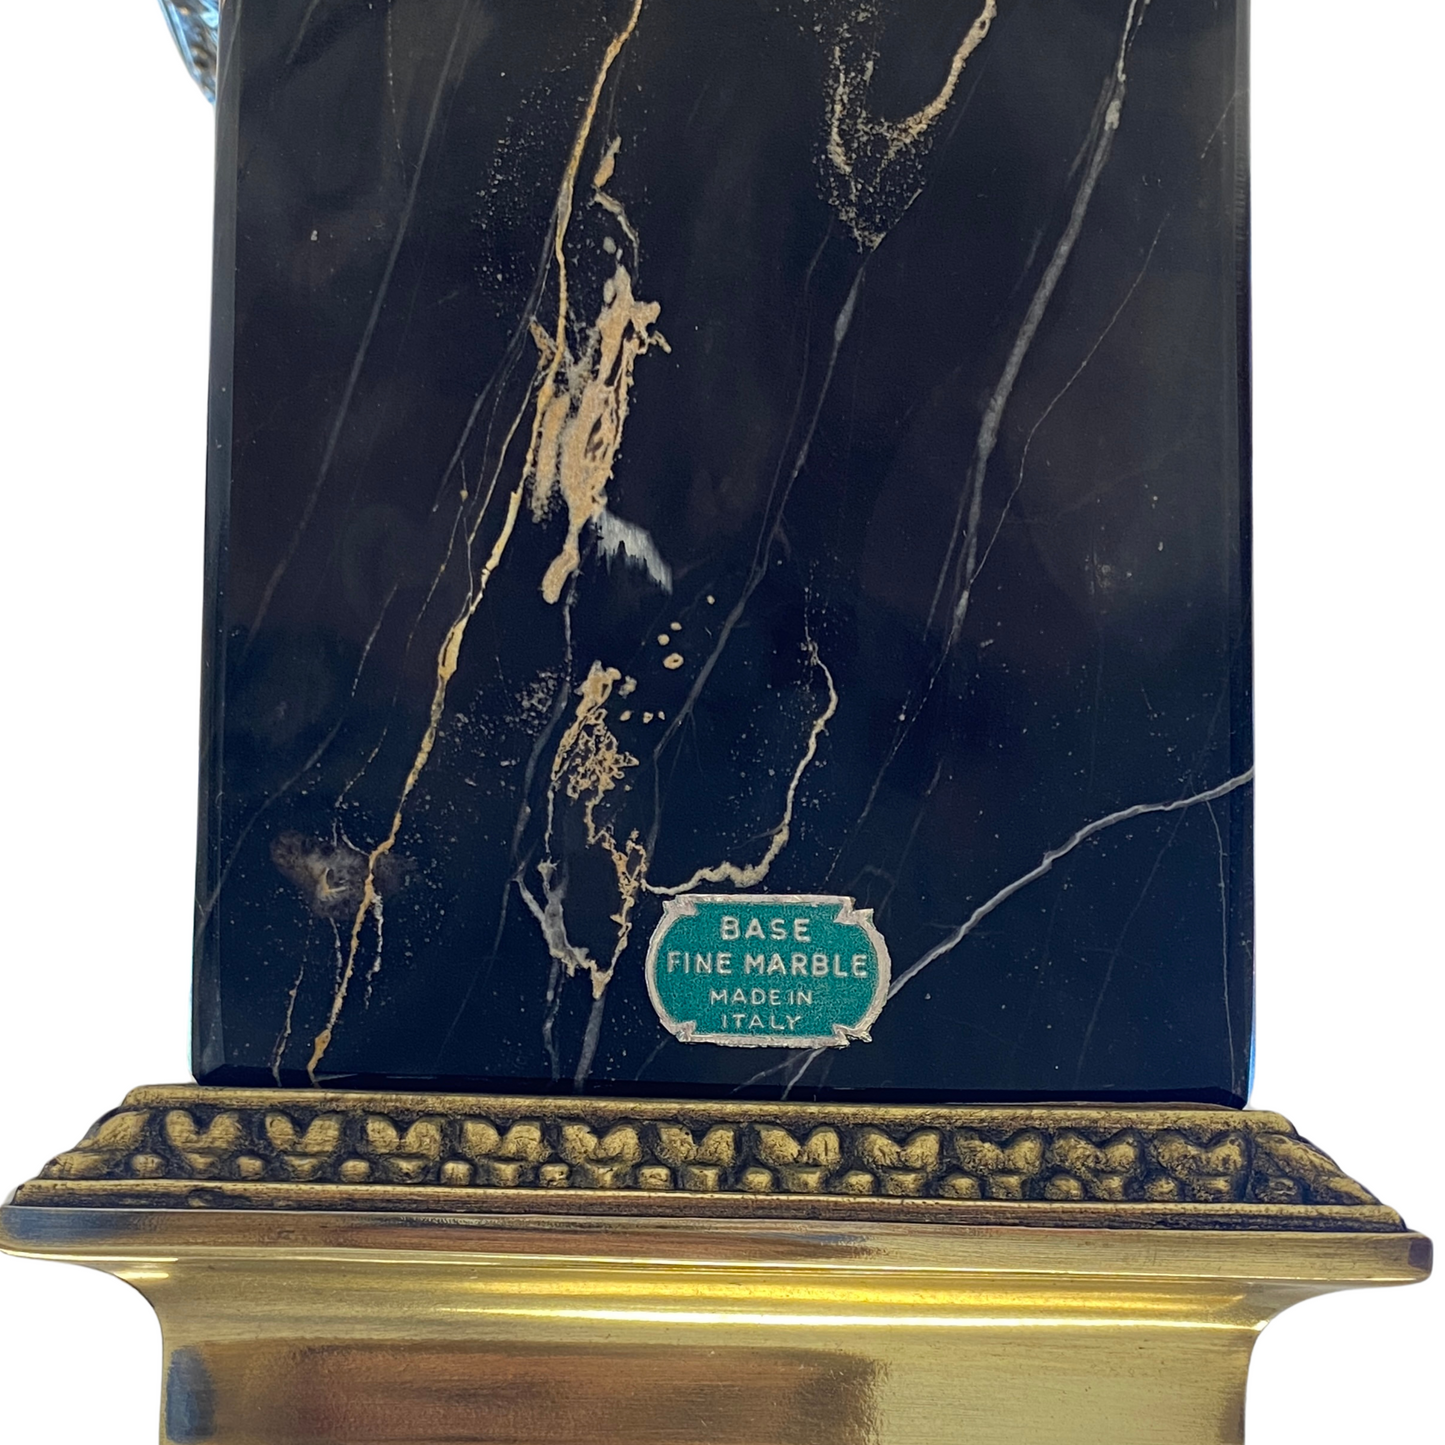 Crystal & Italian Marble Regency Lamp